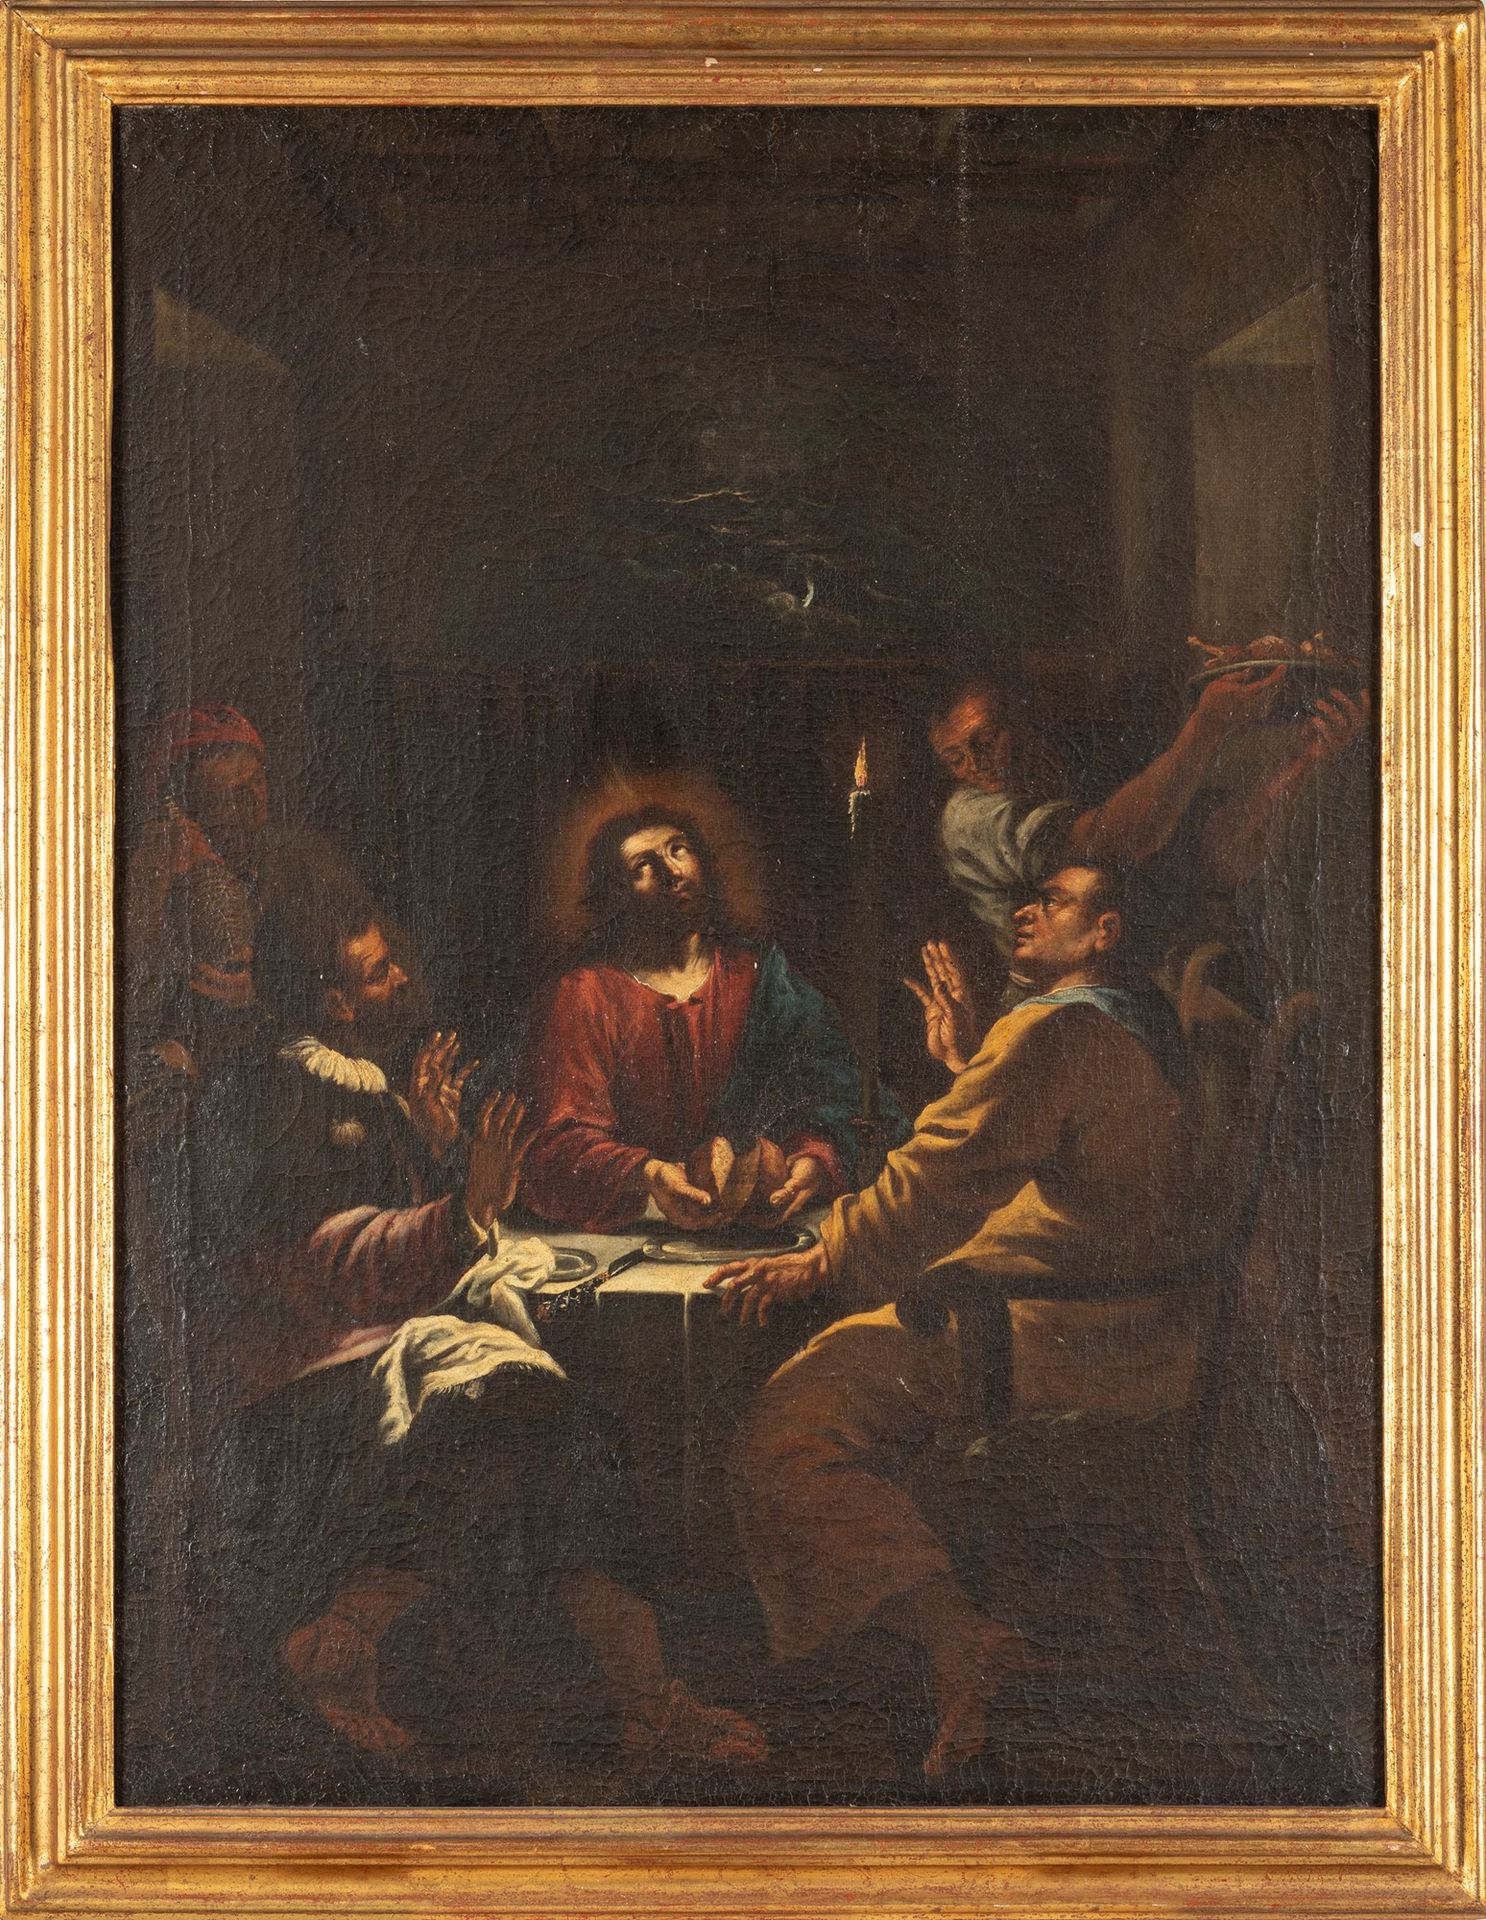 Scuola veneta, secolo XVII Supper at Emmaus

oil on canvas 
95.5 x 71 cm